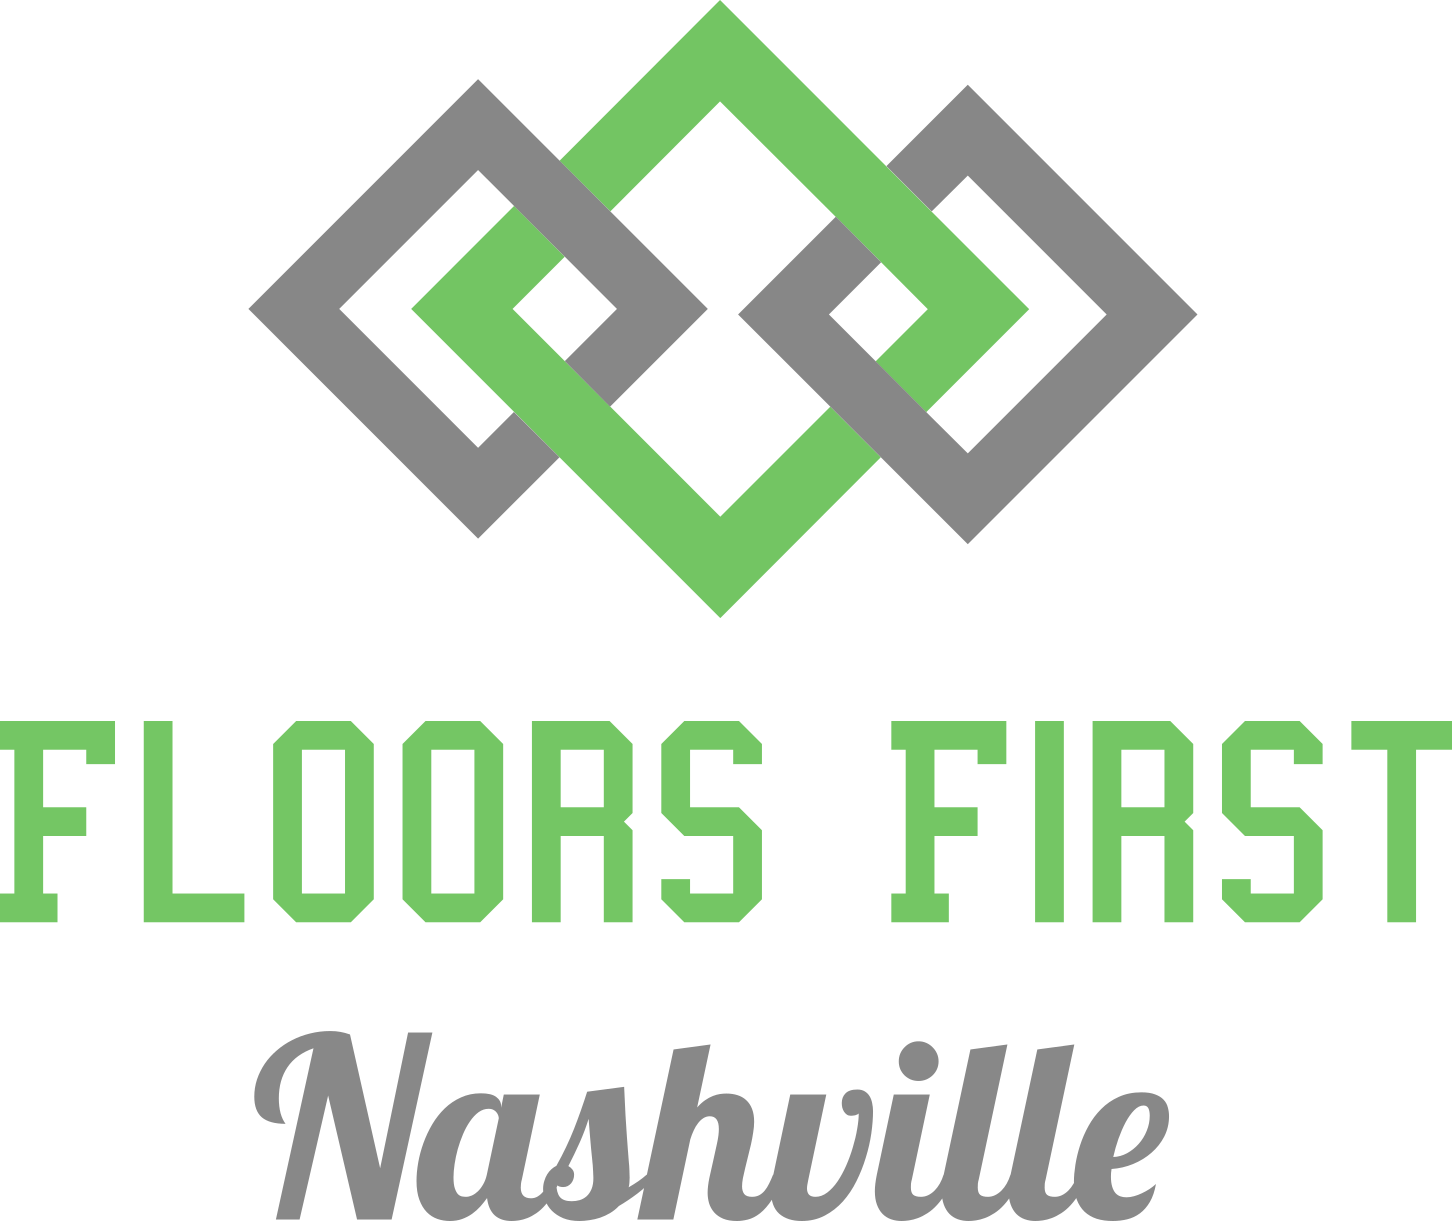 Floors First Nashville